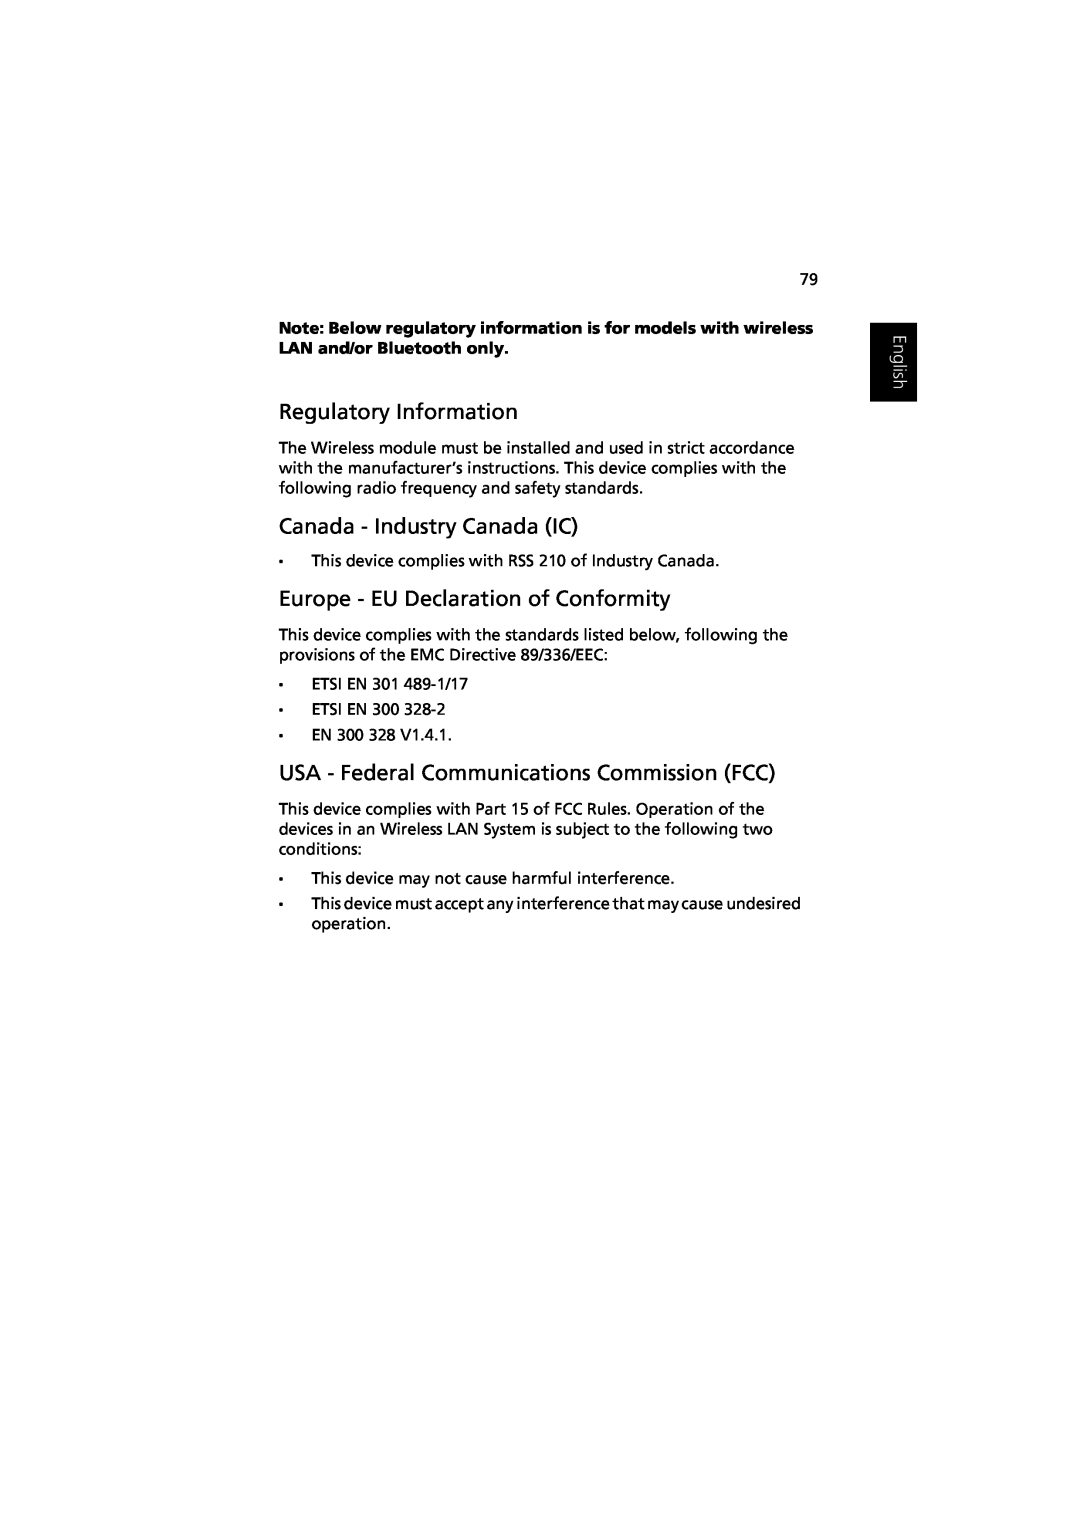 Acer Aspire 1350 manual Regulatory Information, Canada - Industry Canada IC, Europe - EU Declaration of Conformity, English 